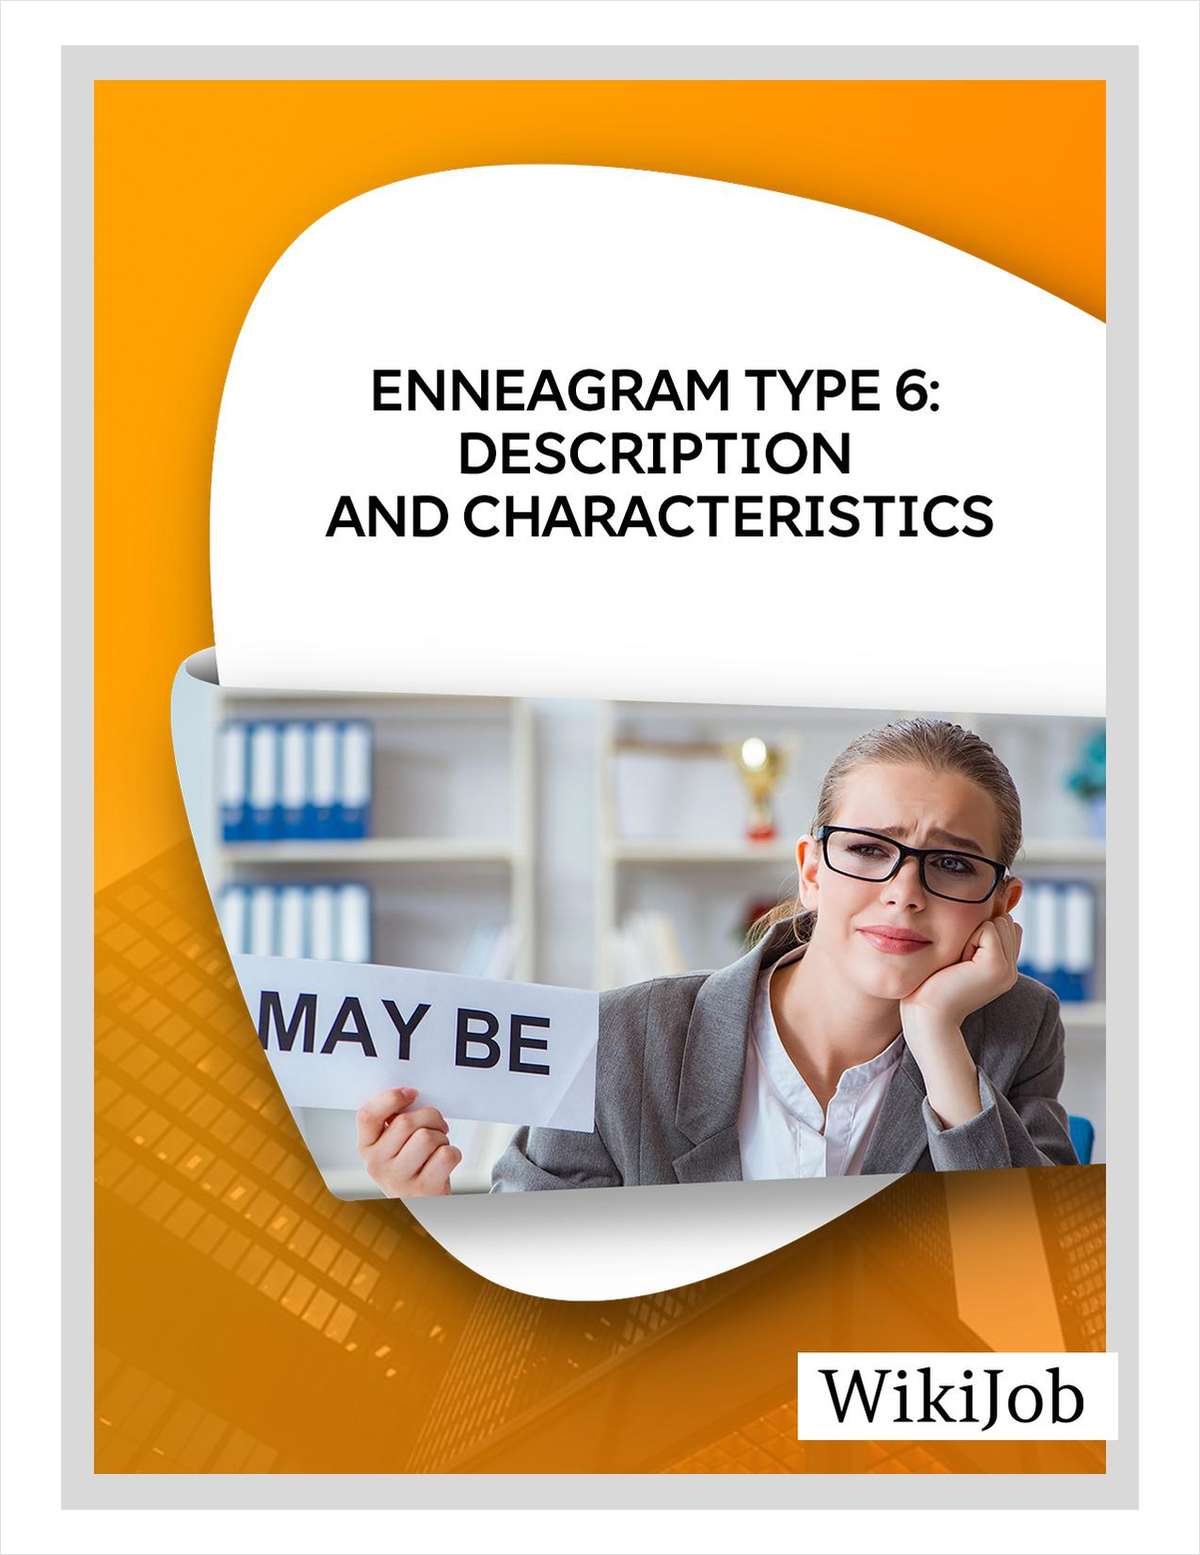 Enneagram Type 6: Description and Characteristics